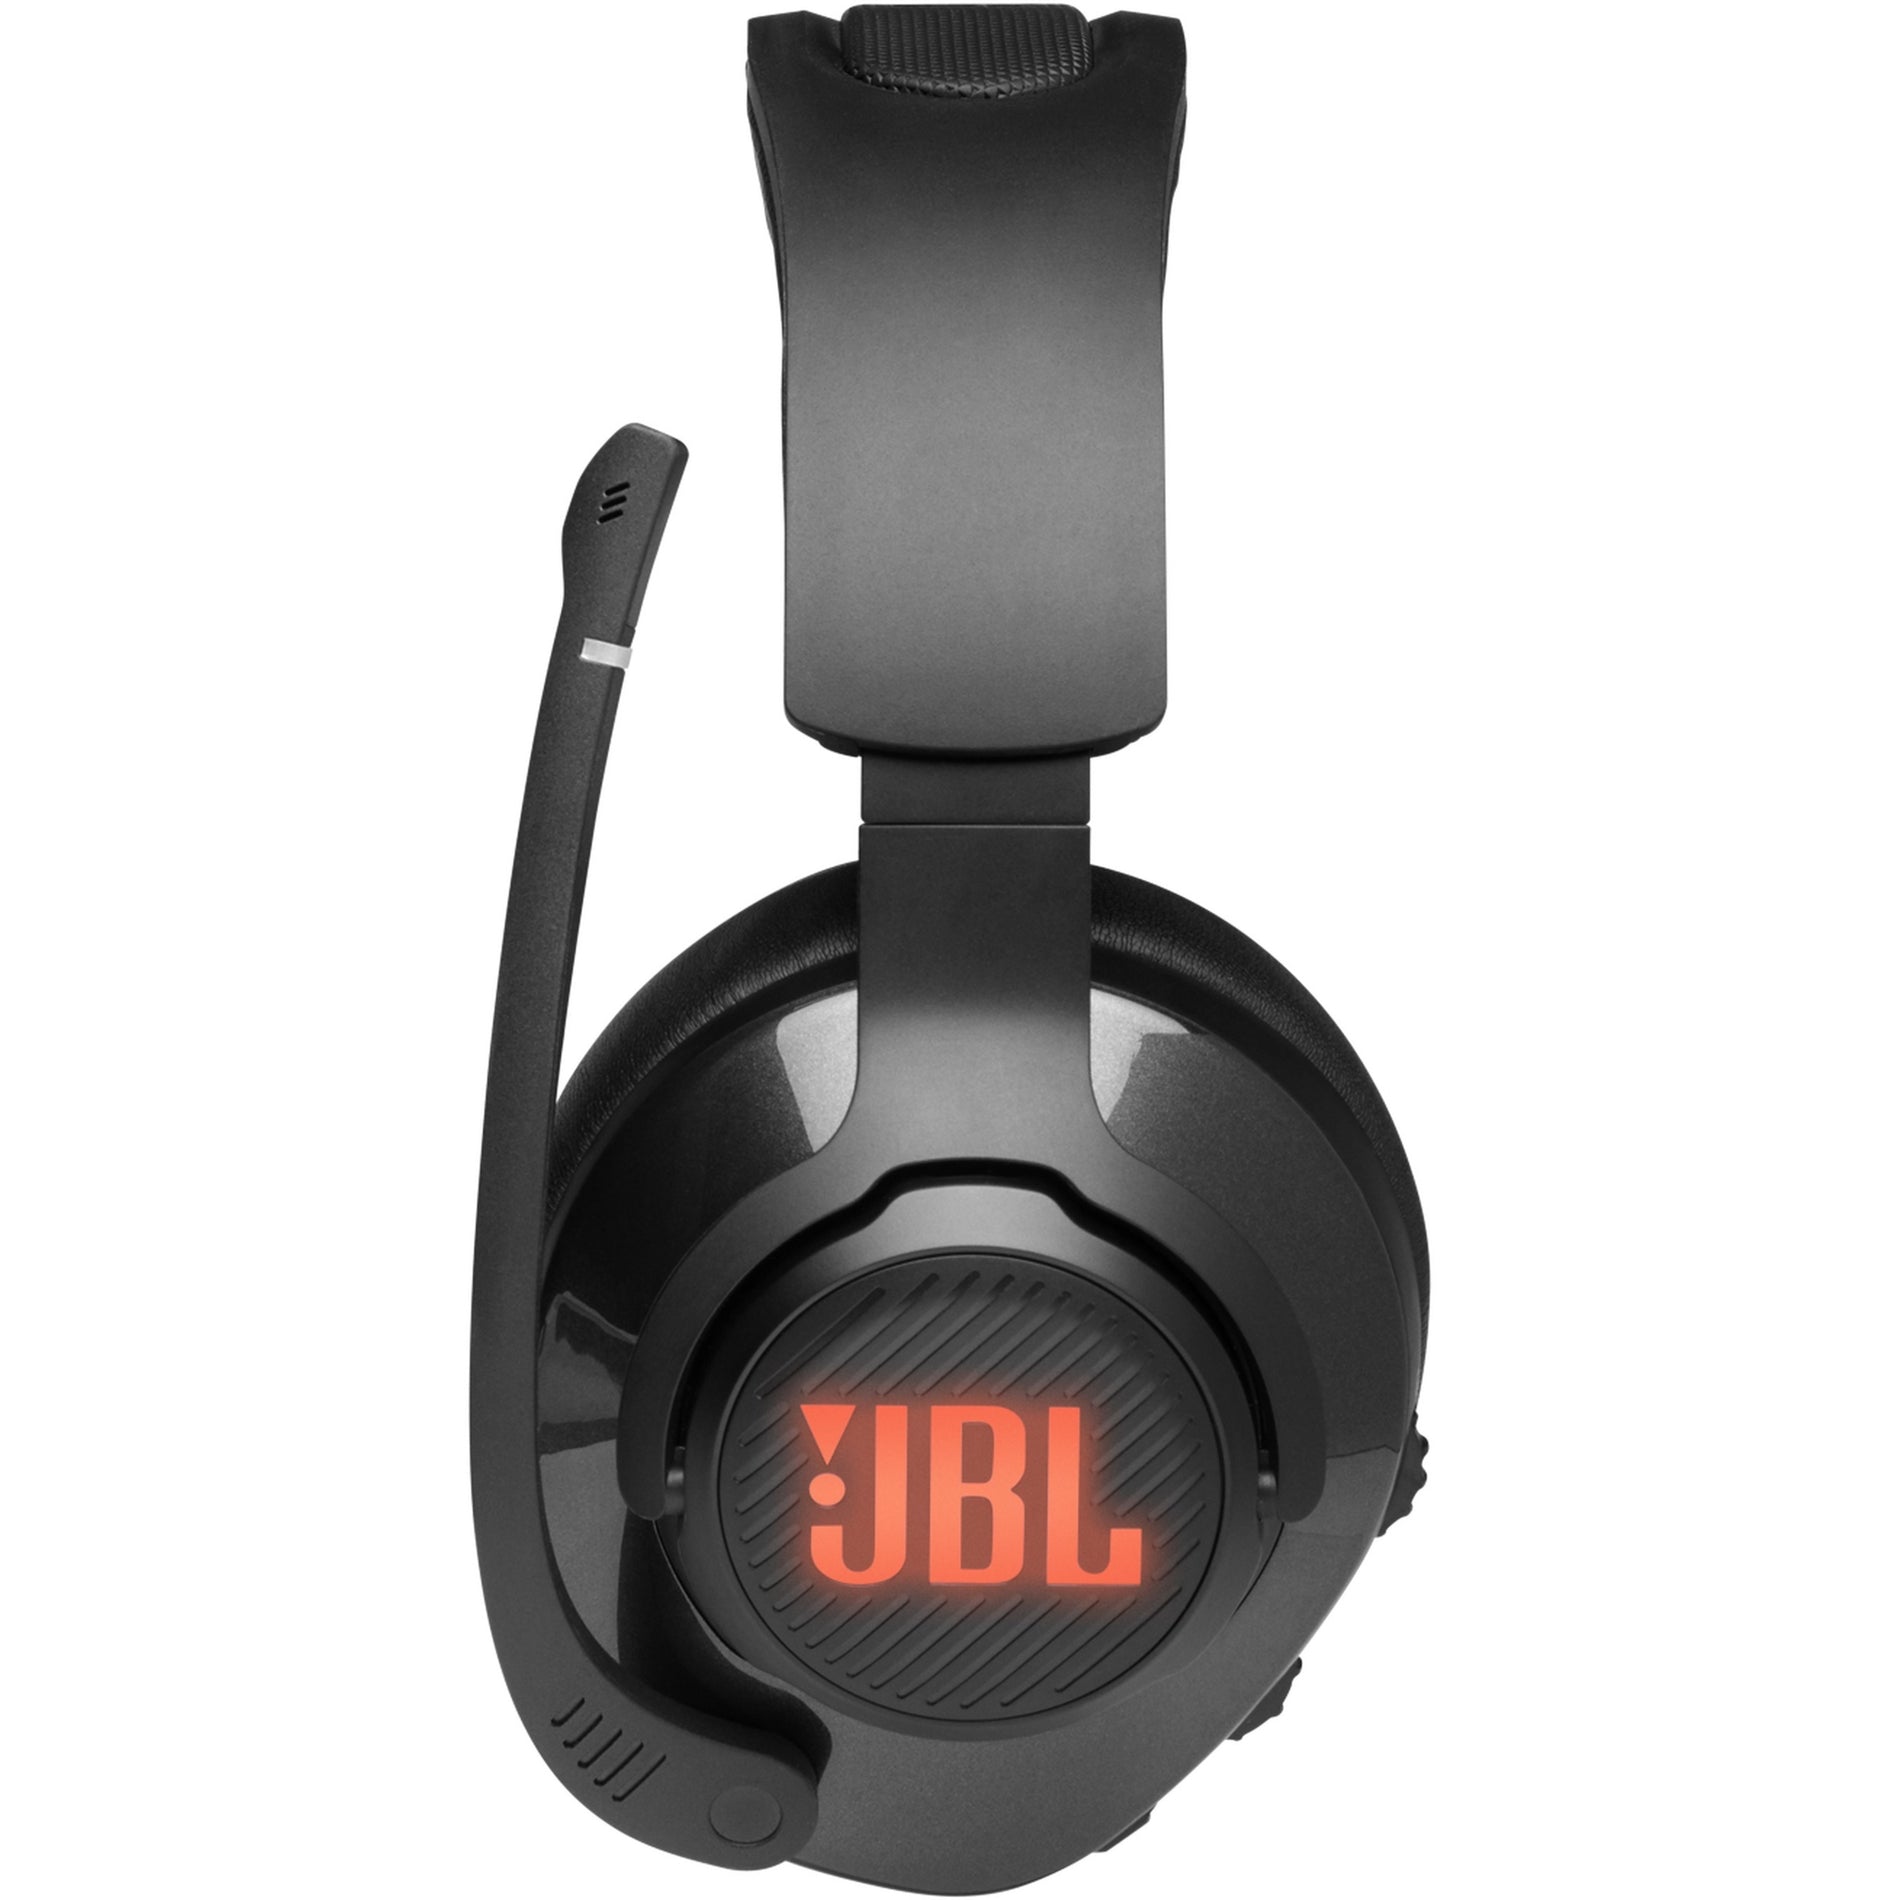 JBL JBL-QUANTUM400P Quantum 400 Gaming Headset, Stereo Sound, Comfortable Fit, Lightweight